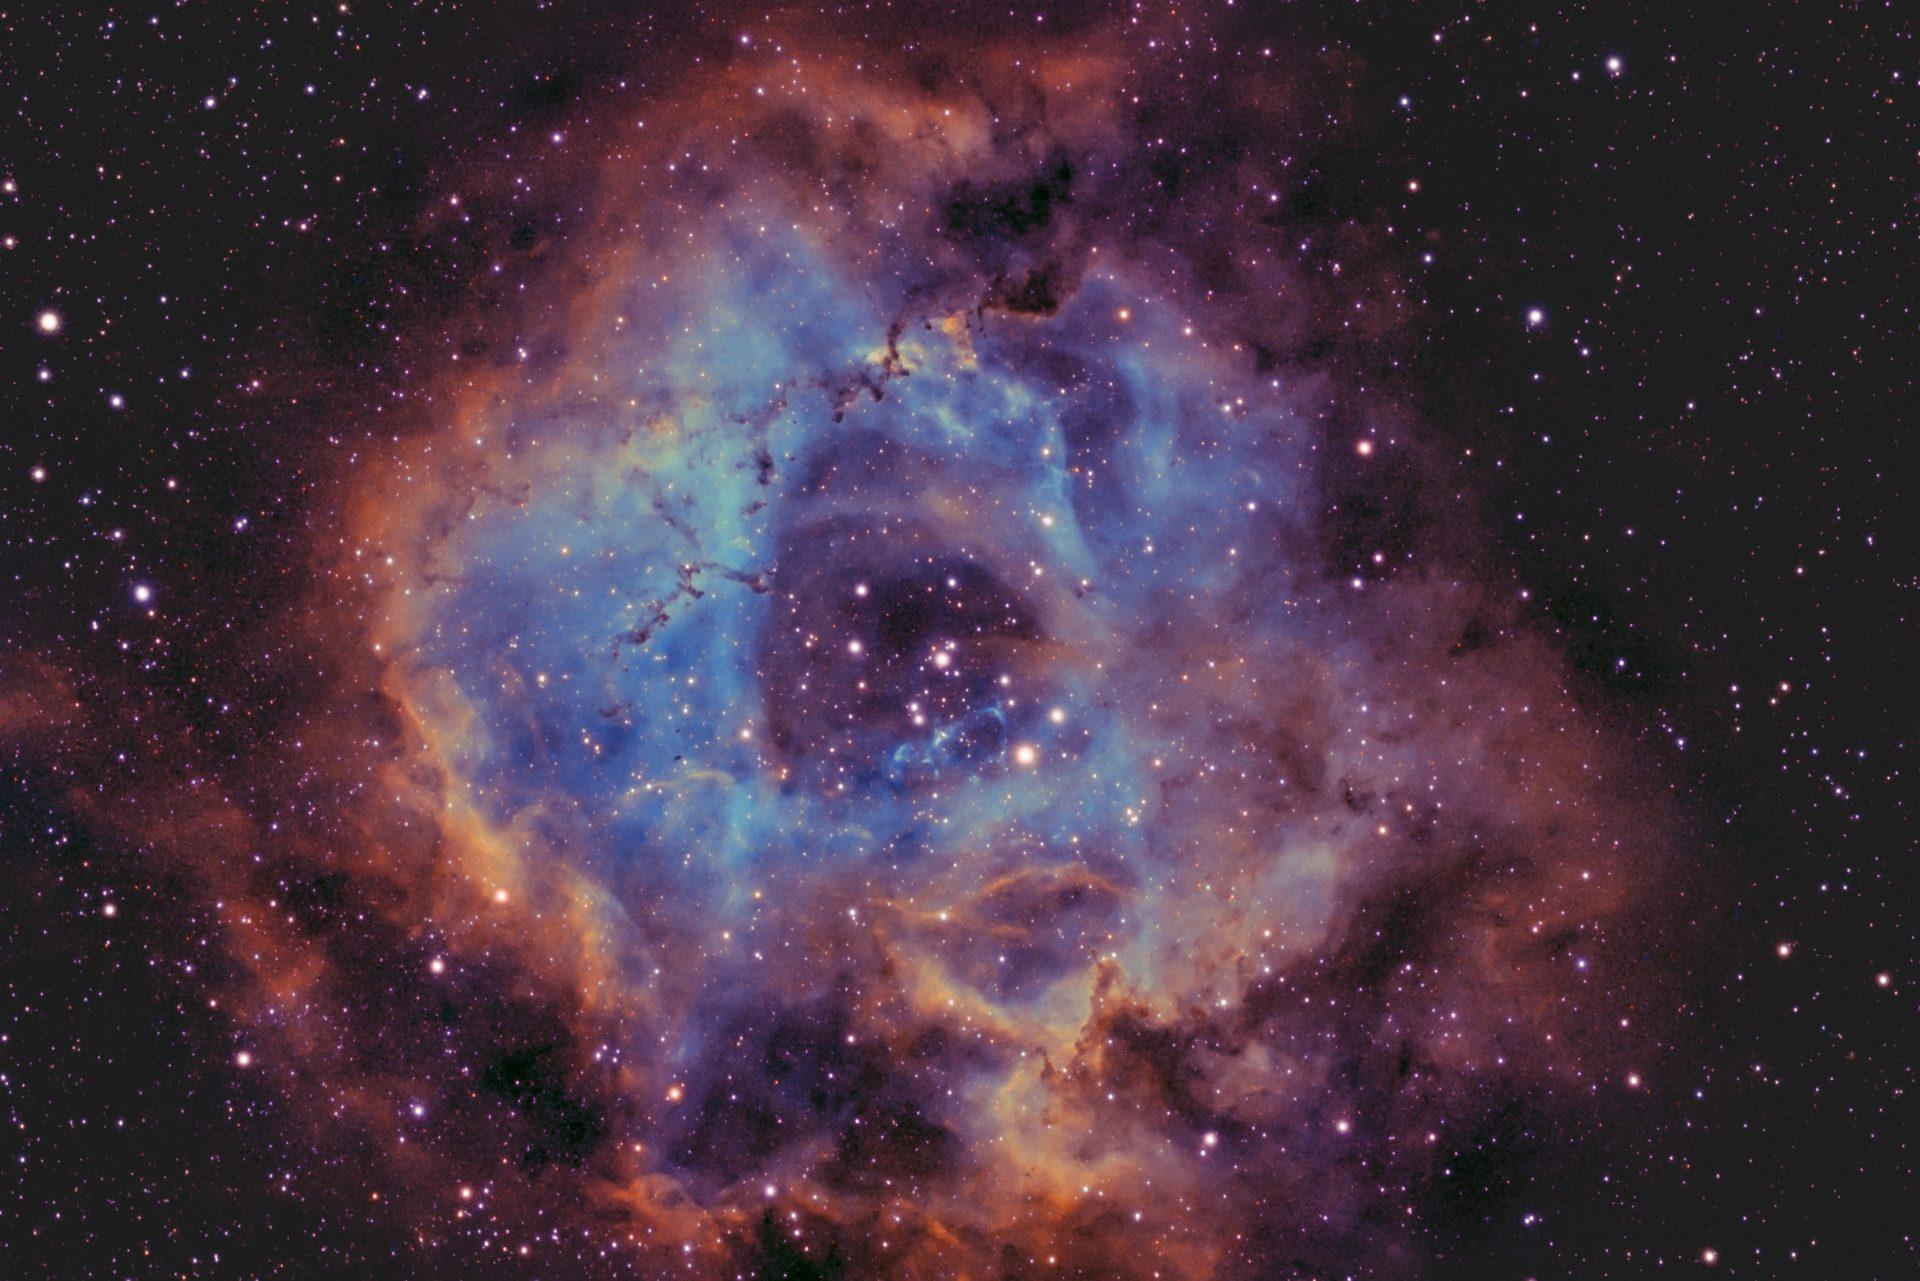 Rosette Nebula | Jacob Deane - geek, photographer, engineer